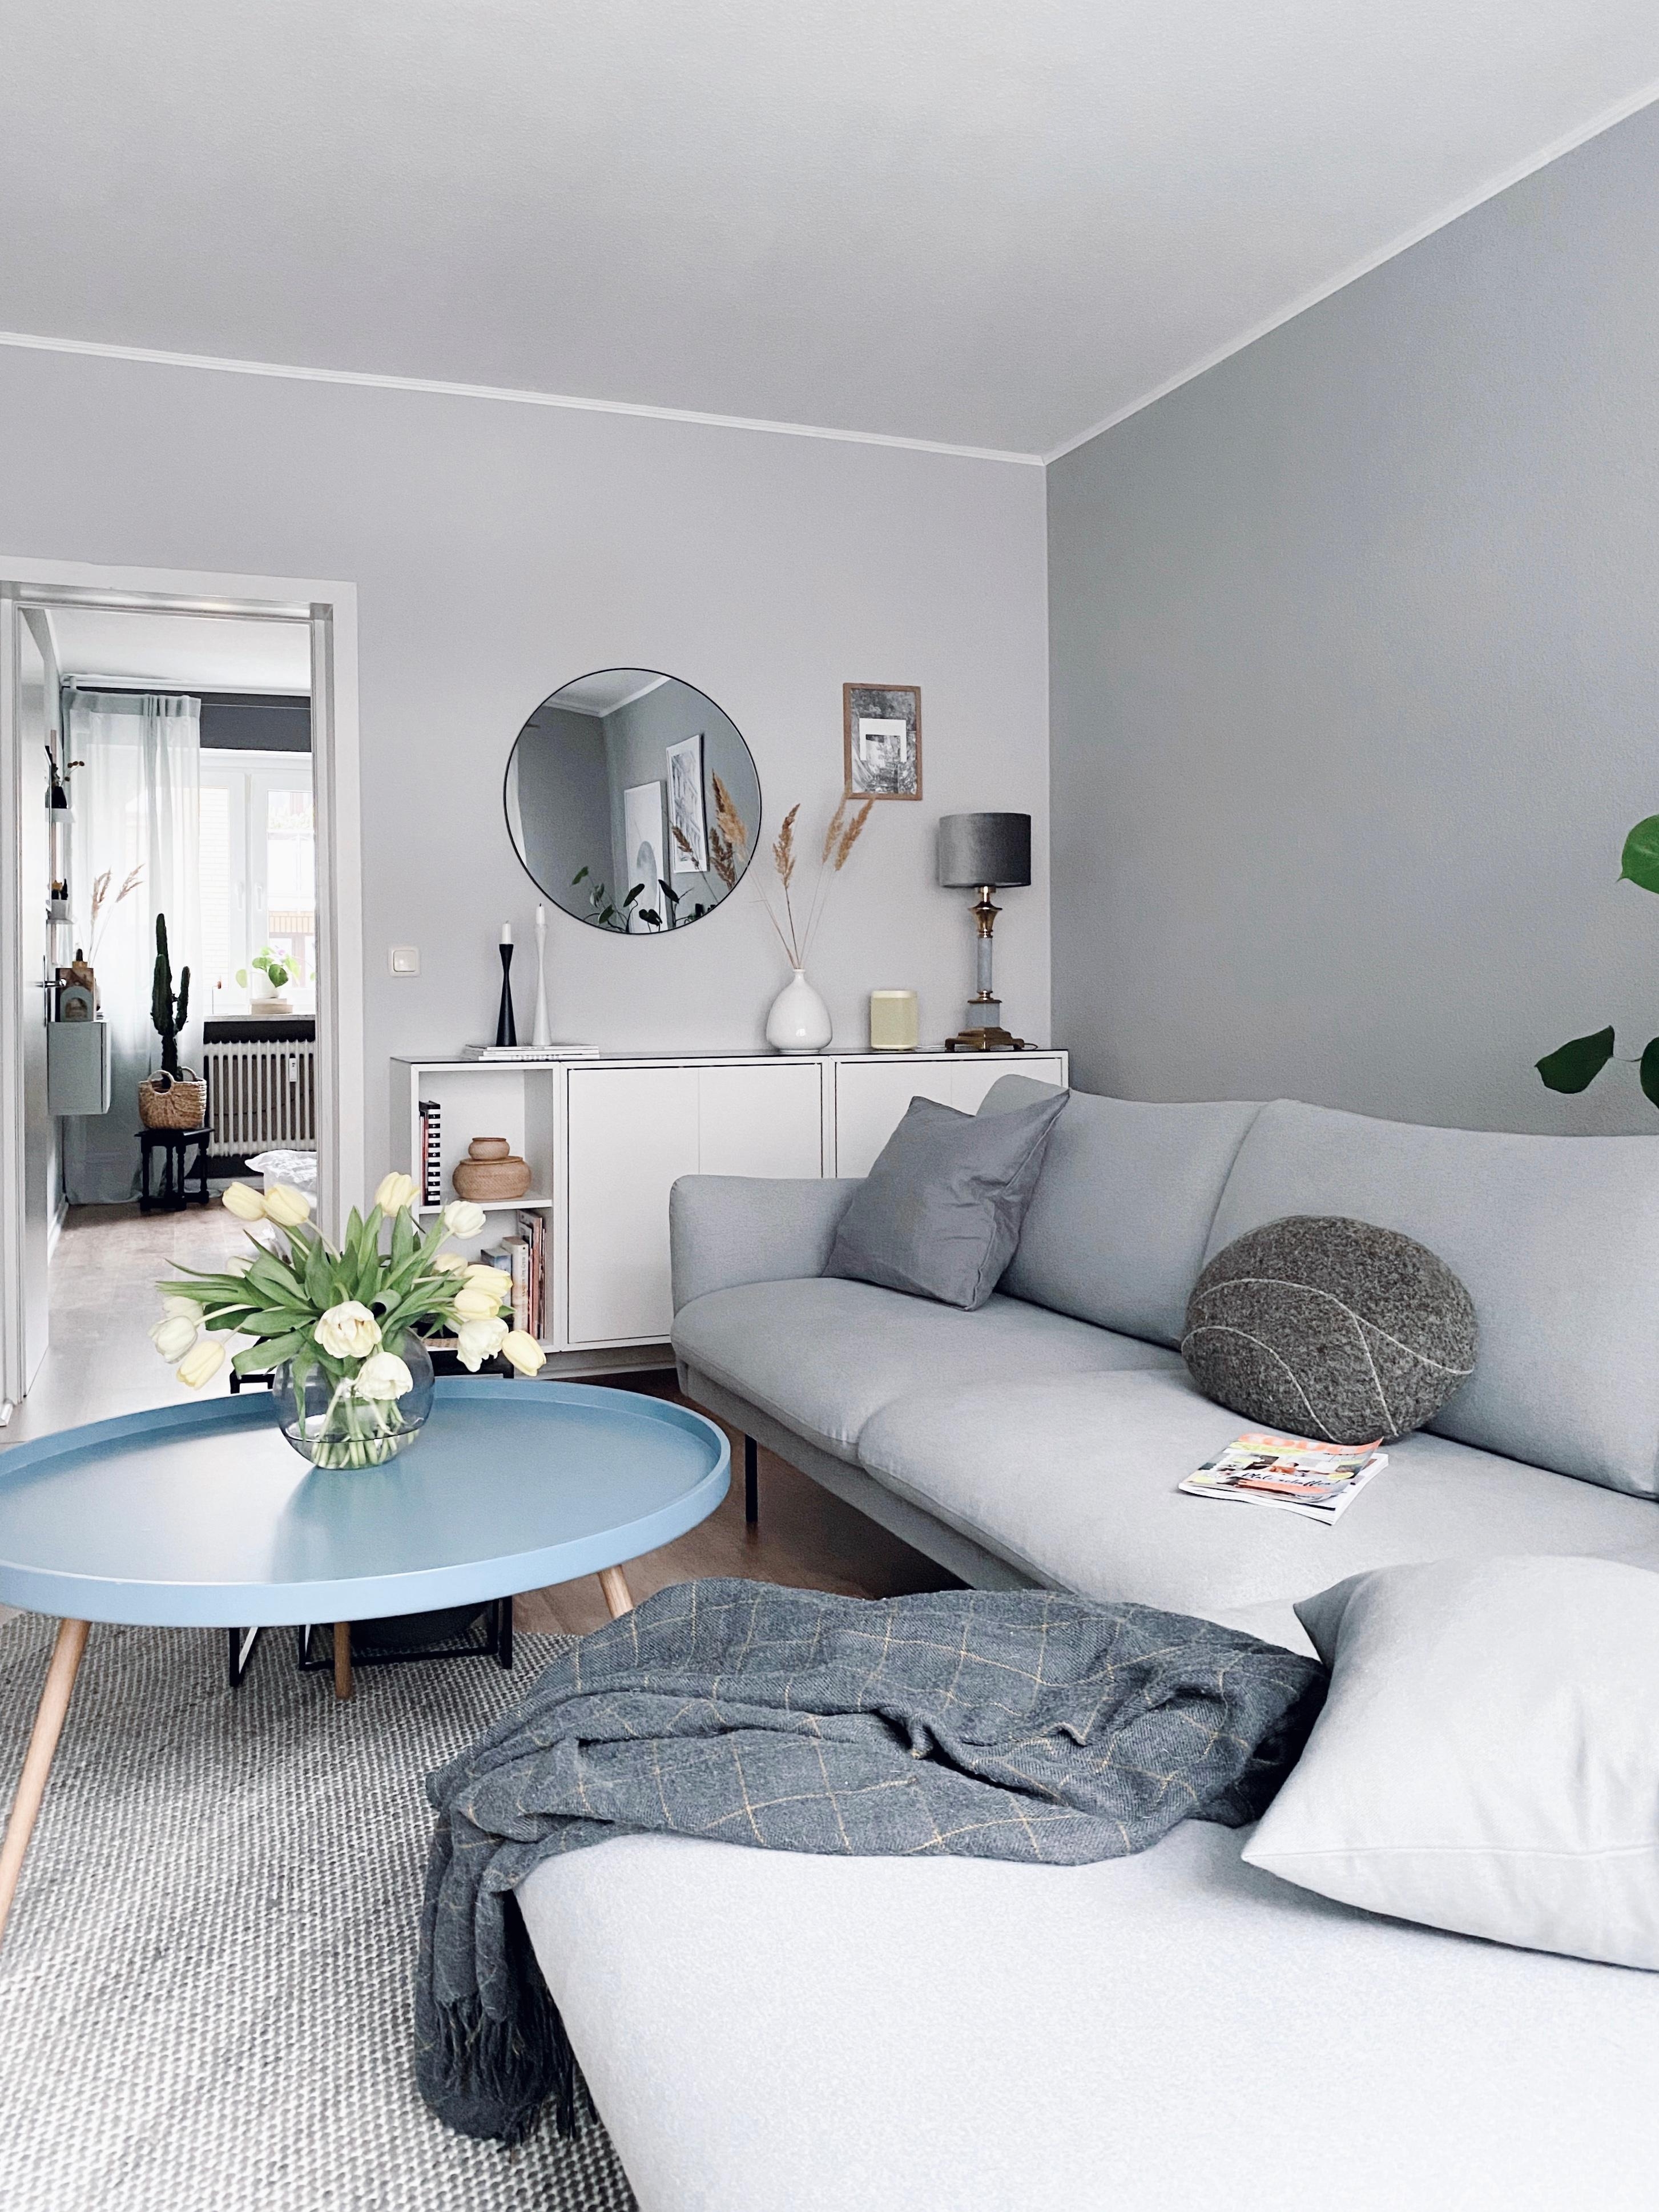 Sundaymood 🤍
#mynordicroom #interior #hygge #greylover #minimalism #scandinavianliving #livingroom #livingroominspo